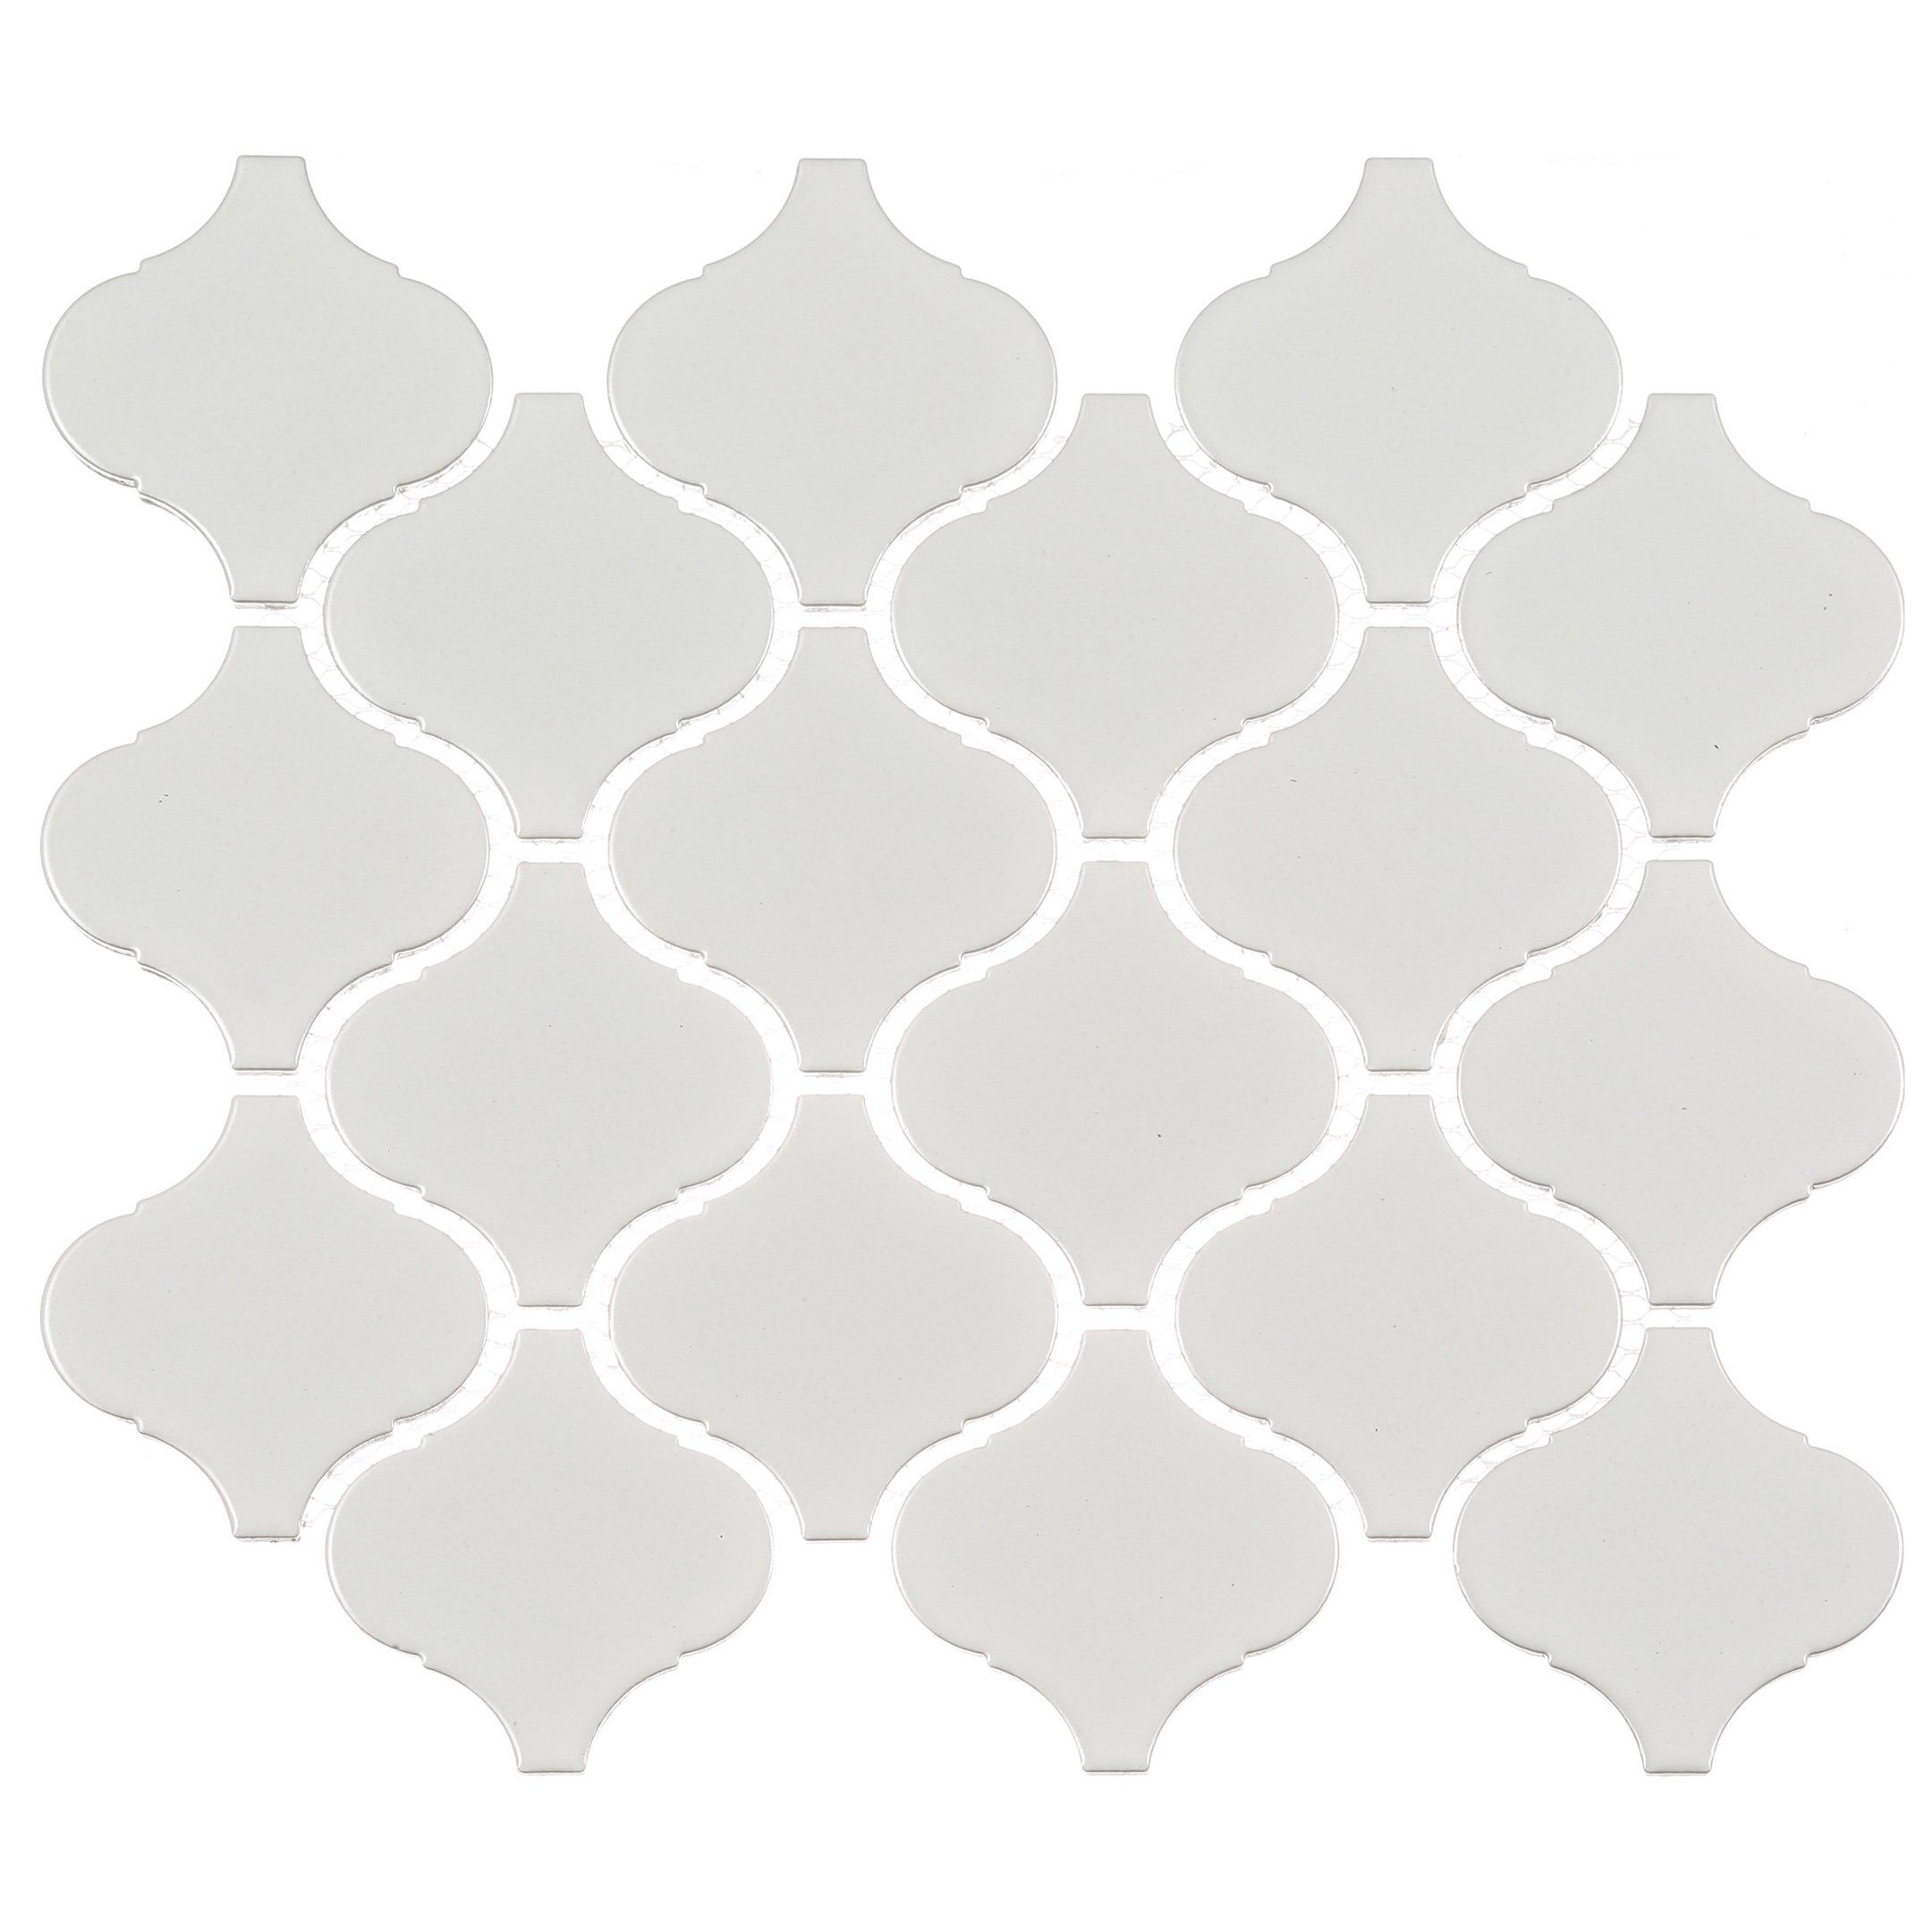 Мозаика Starmosaic Latern белая керамическая 280х246х6 мм матовая мозаика керамическая для кухни чип 78x74 latern shape glossy white starmosaic 280х246 6 упаковка 20 листов 1 38 кв м